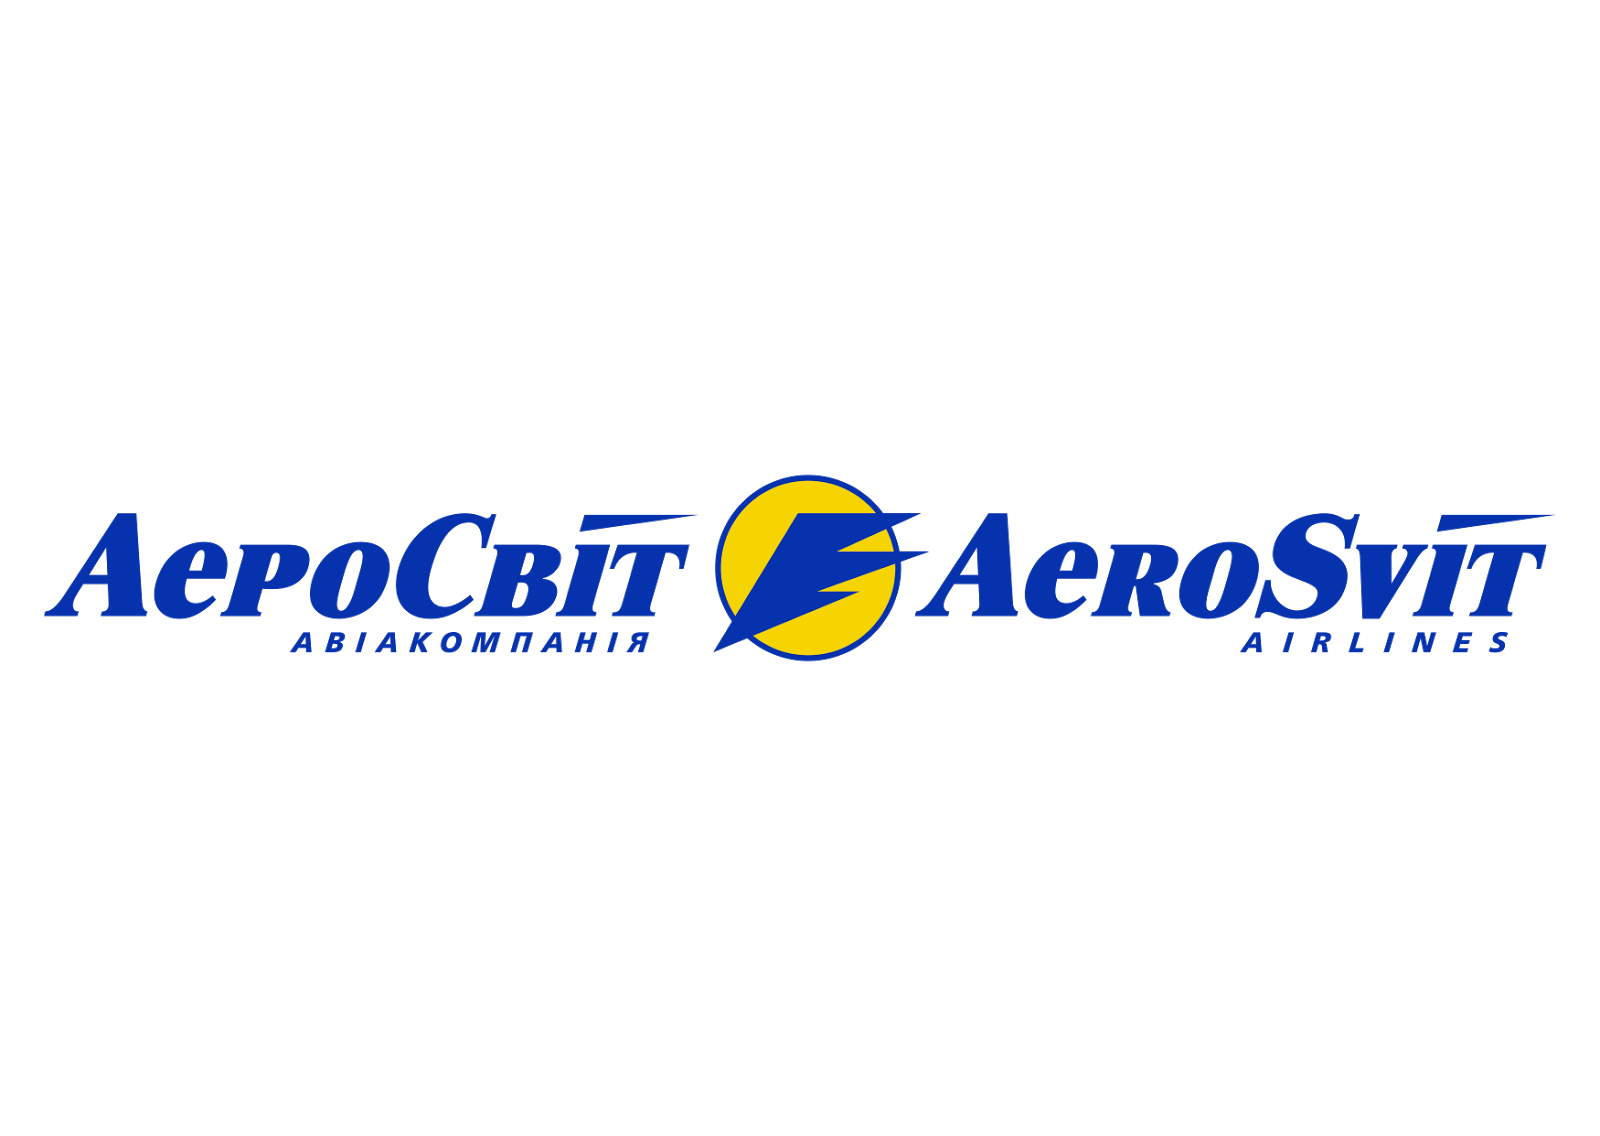 File:AeroSvit Airlines Boeing